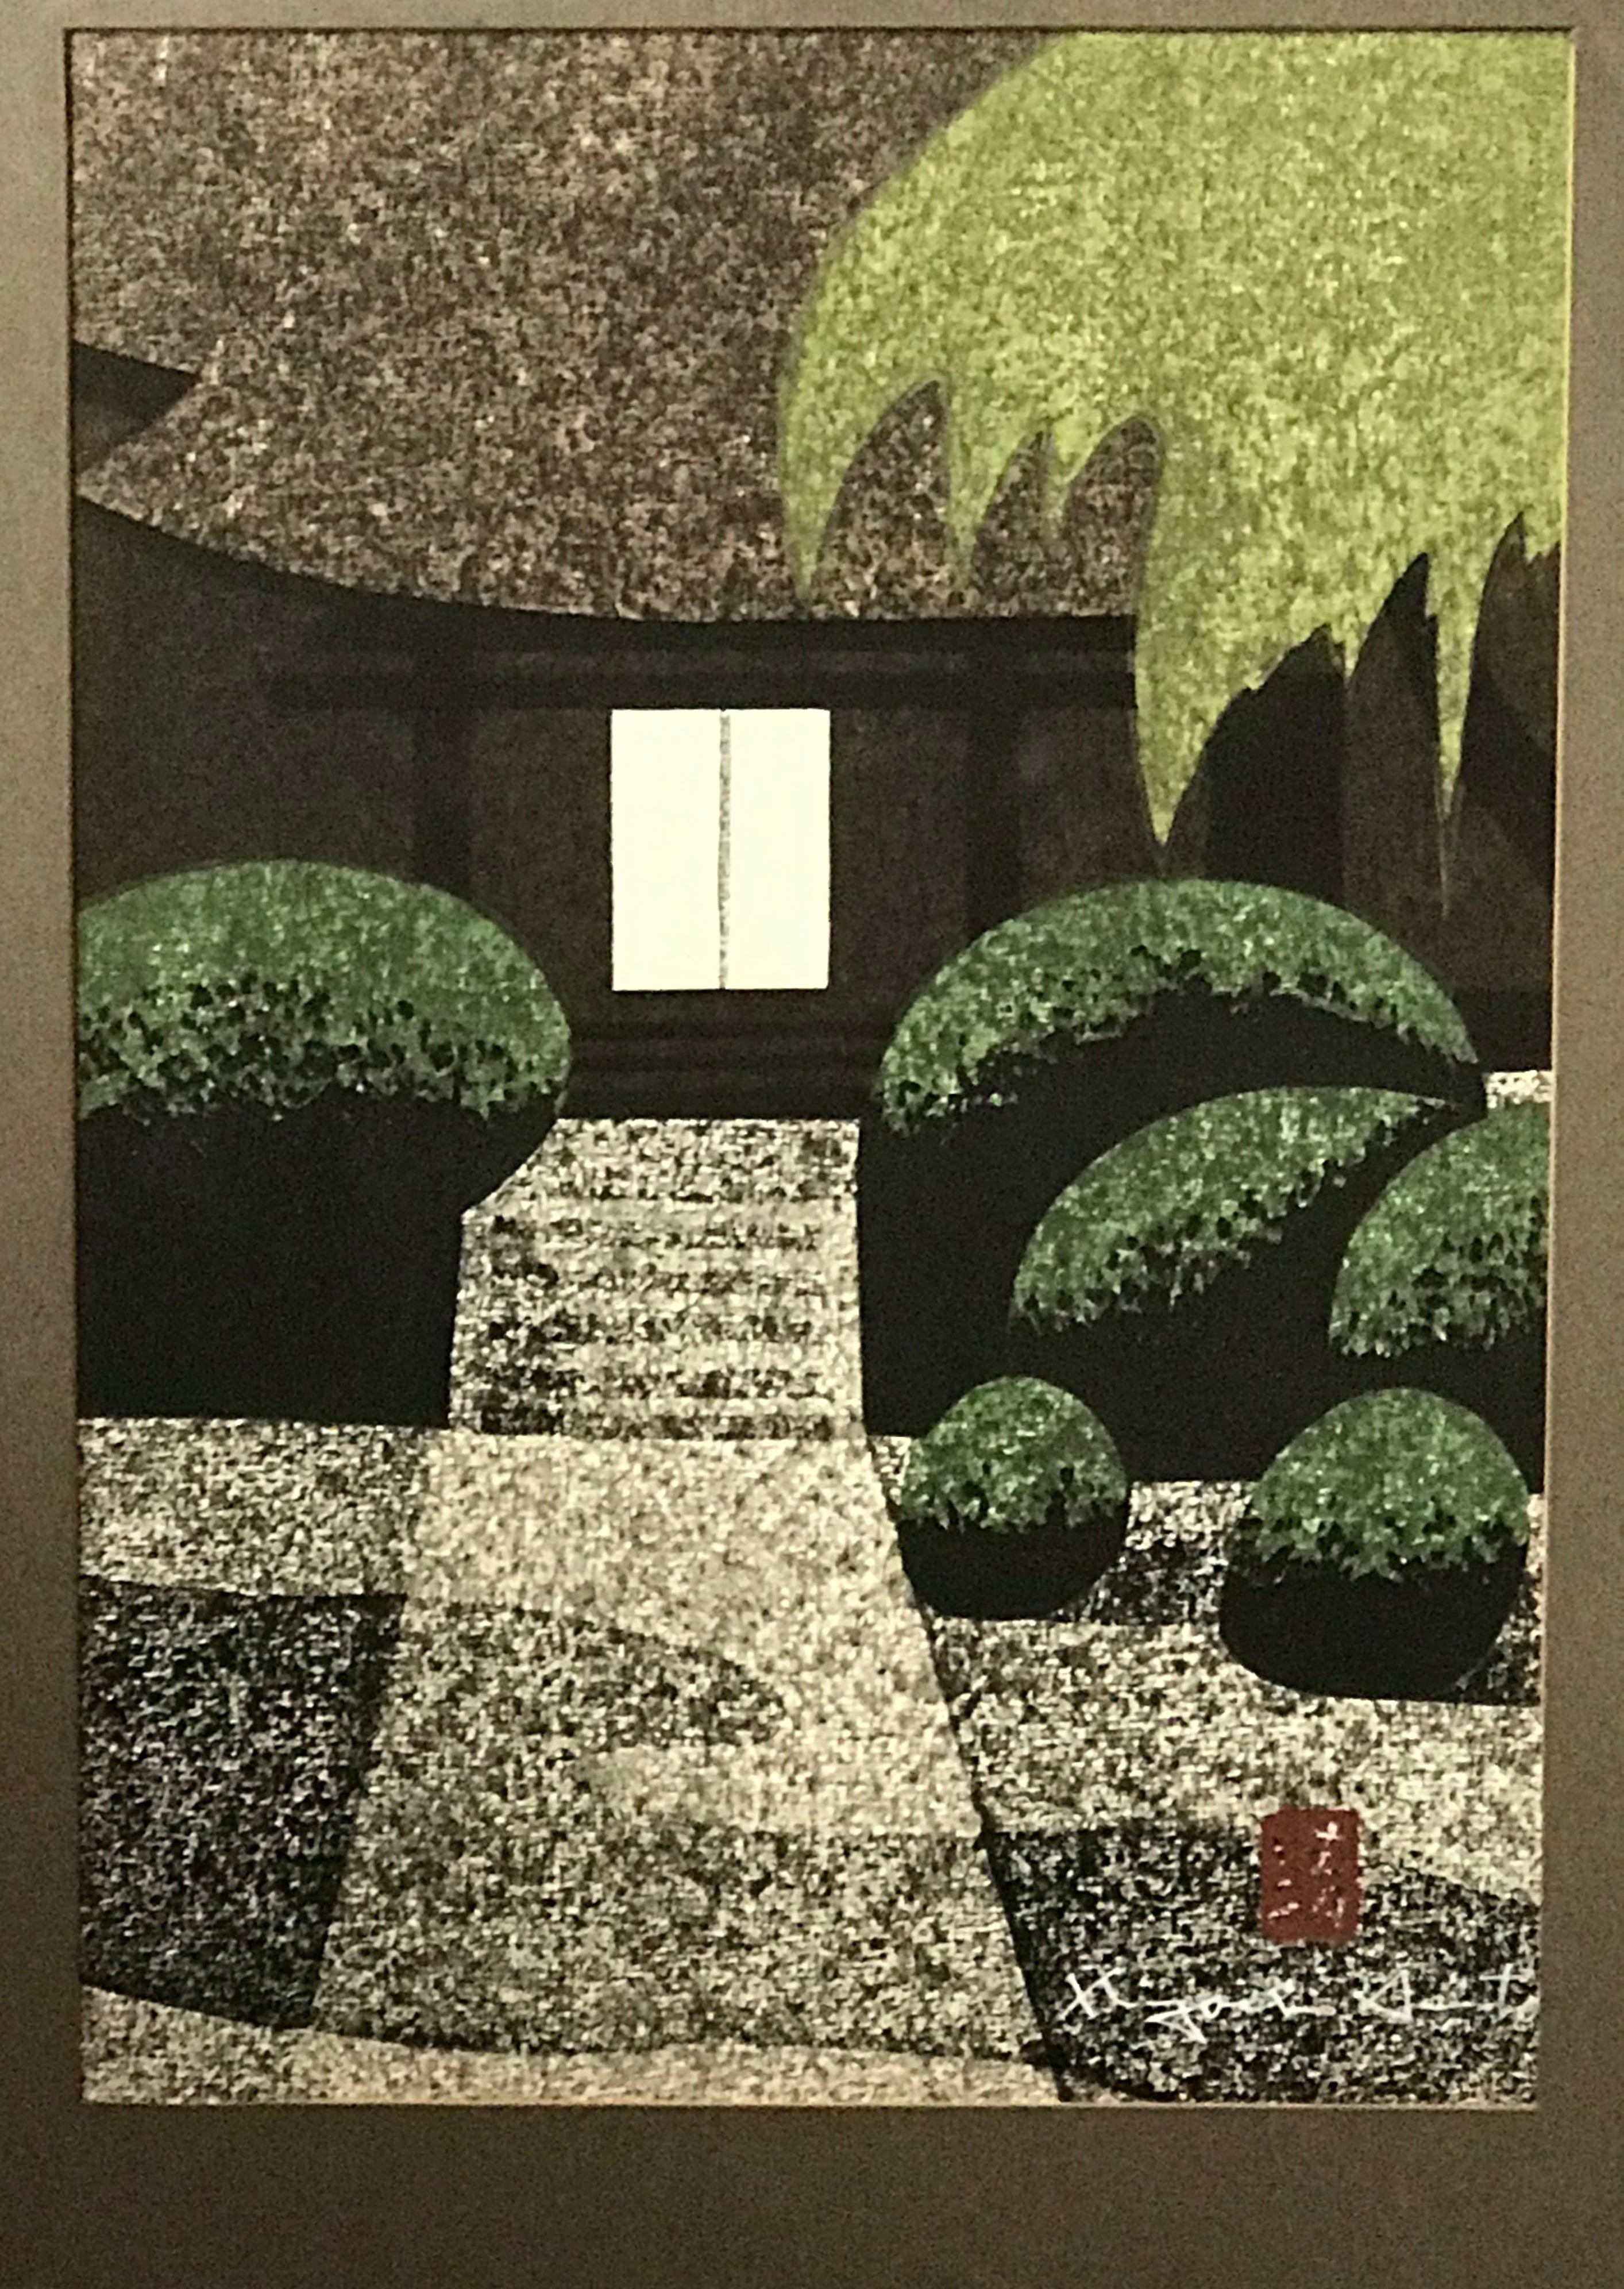  Kaminoyama Jokoji Temple by Kiyoshi Saito- Limited Edition - Print by Kiyoshi Saitō